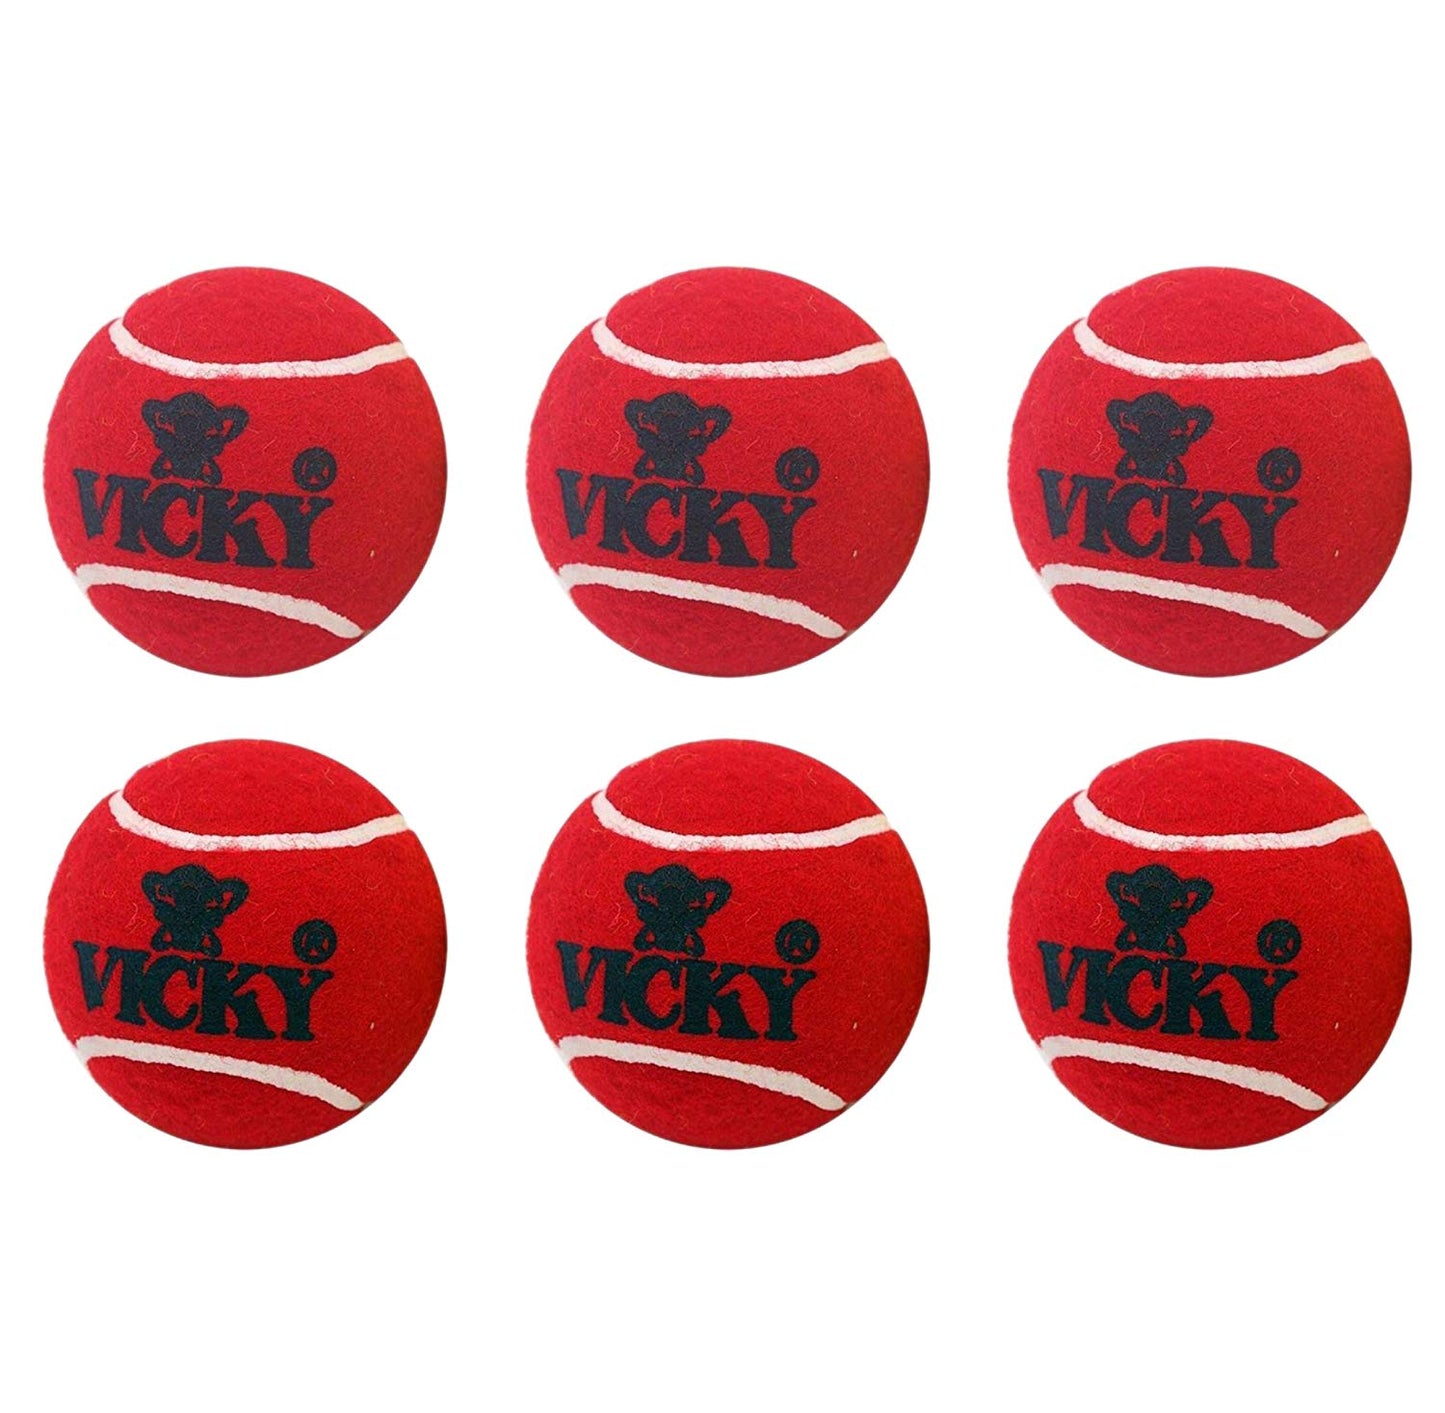 Vicky Cricket Tennis Ball - Heavy, Maroon - Best Price online Prokicksports.com